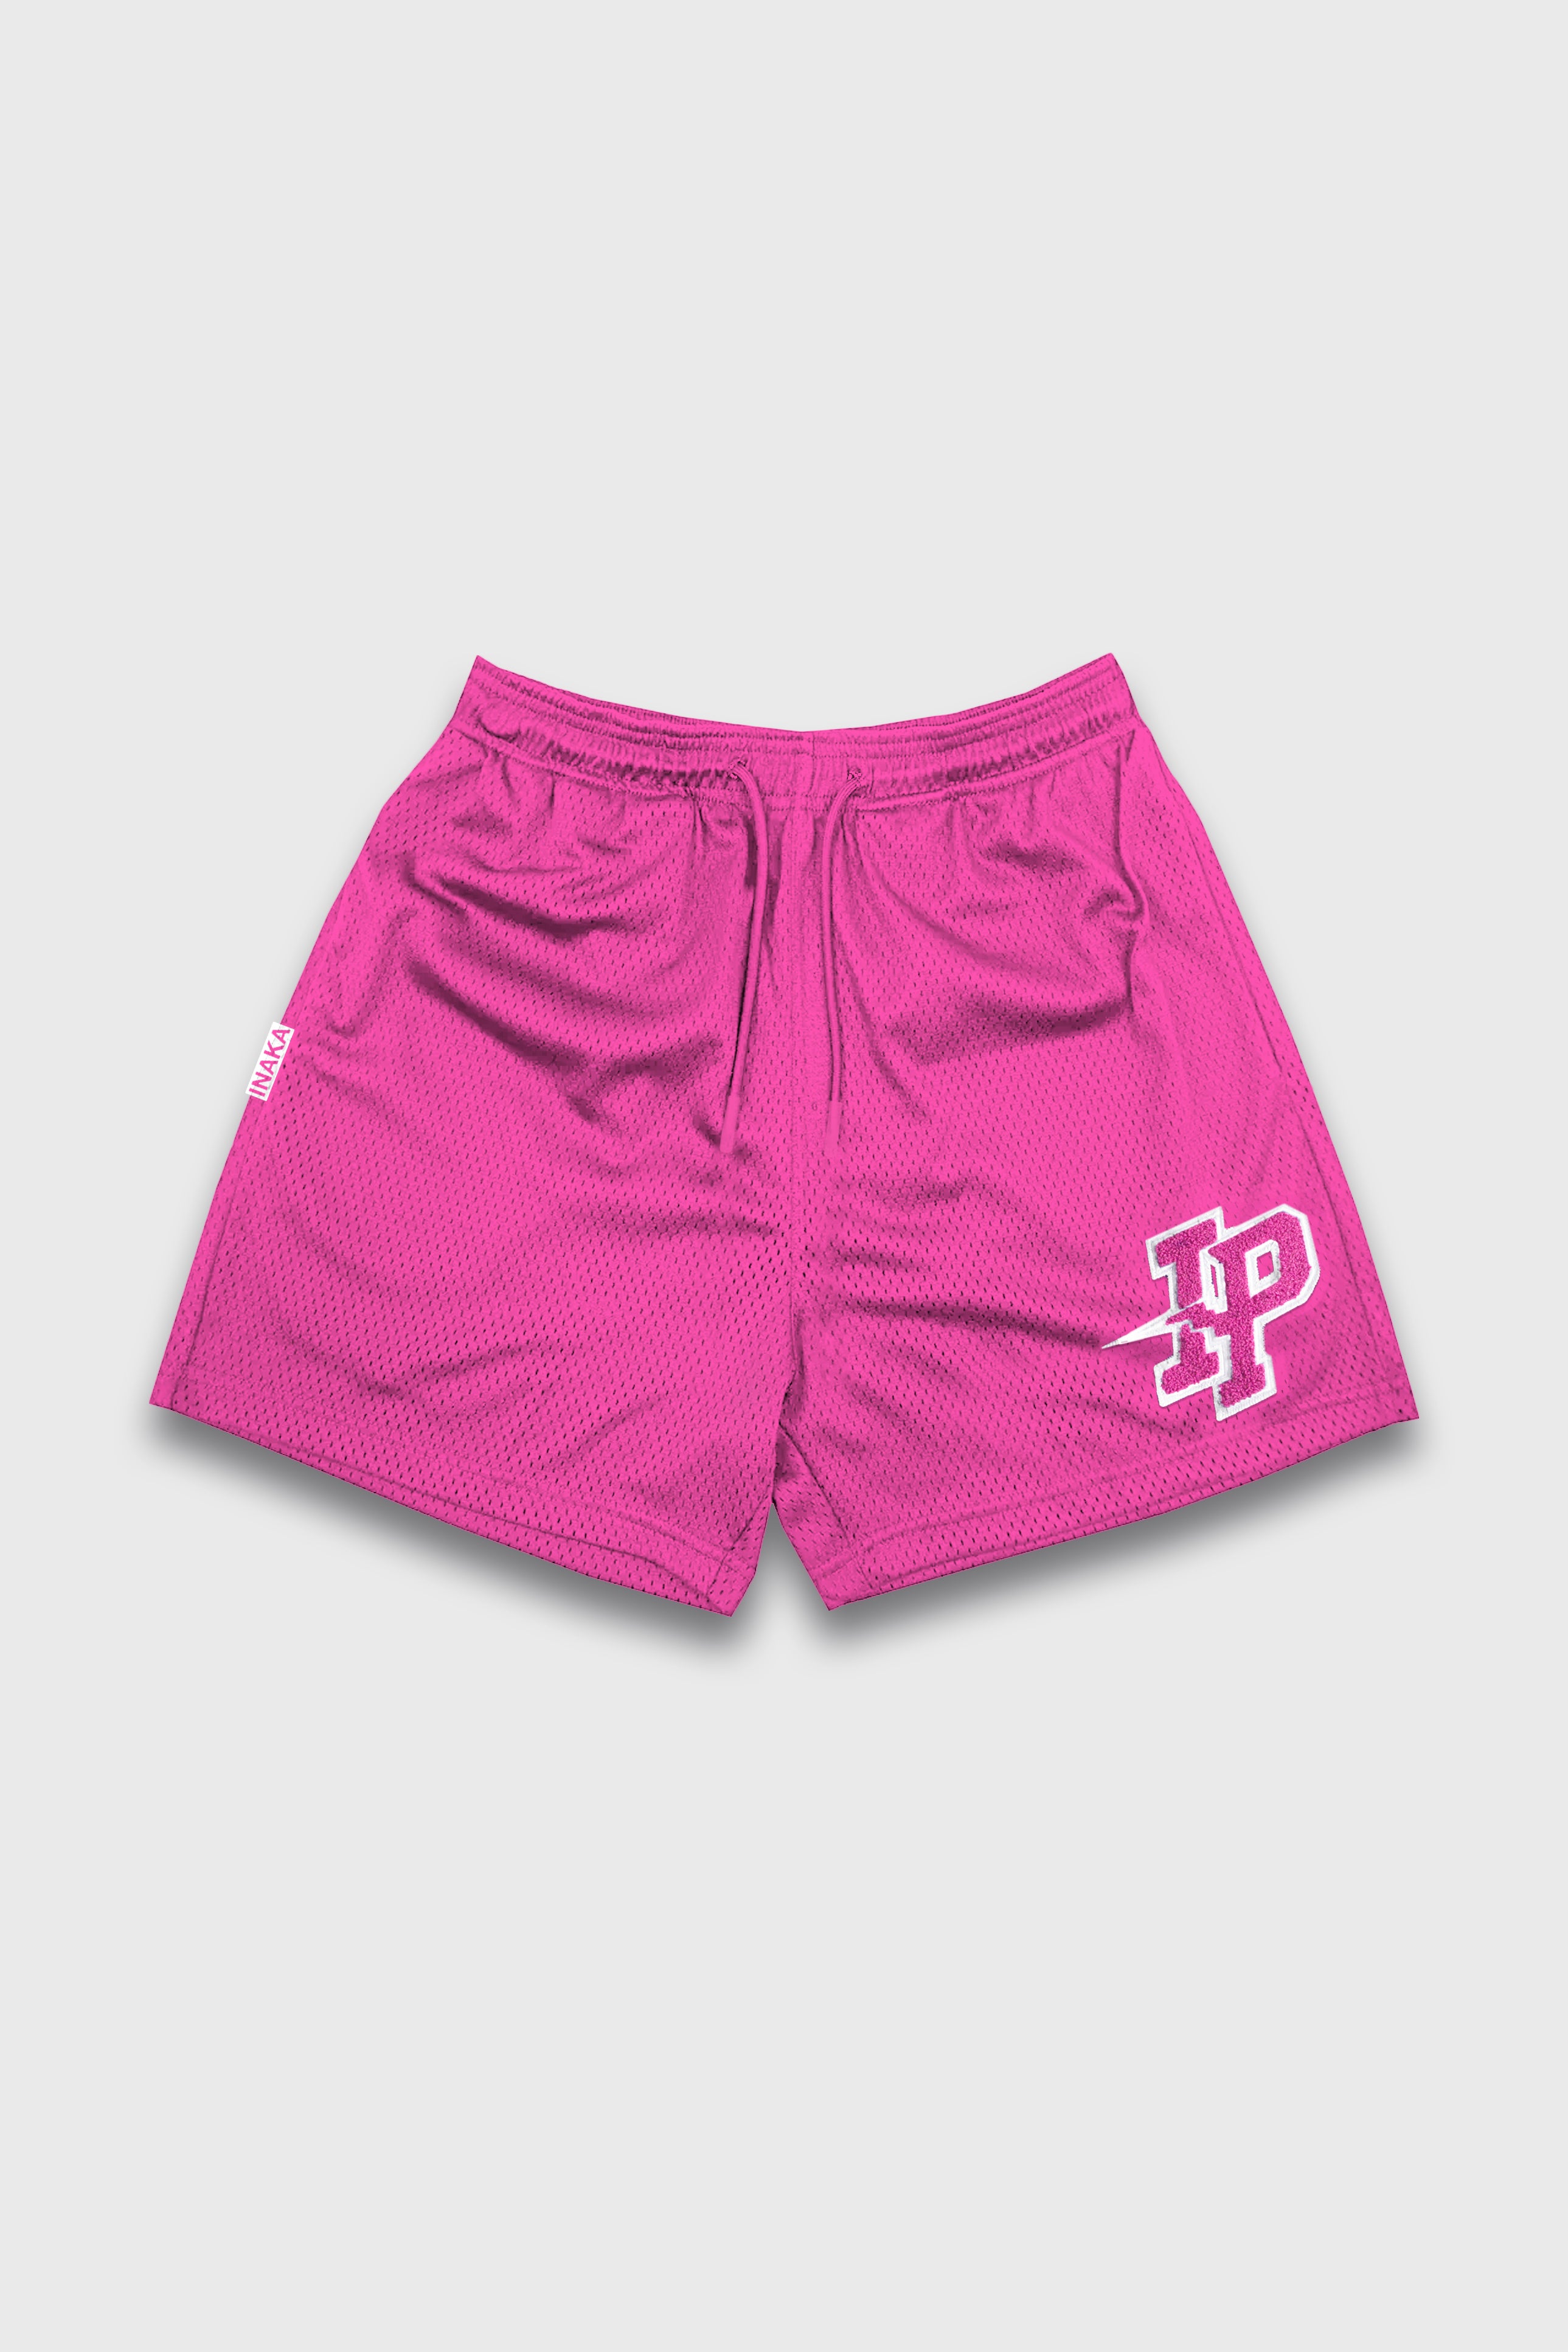 Patch Basic Shorts - Pink